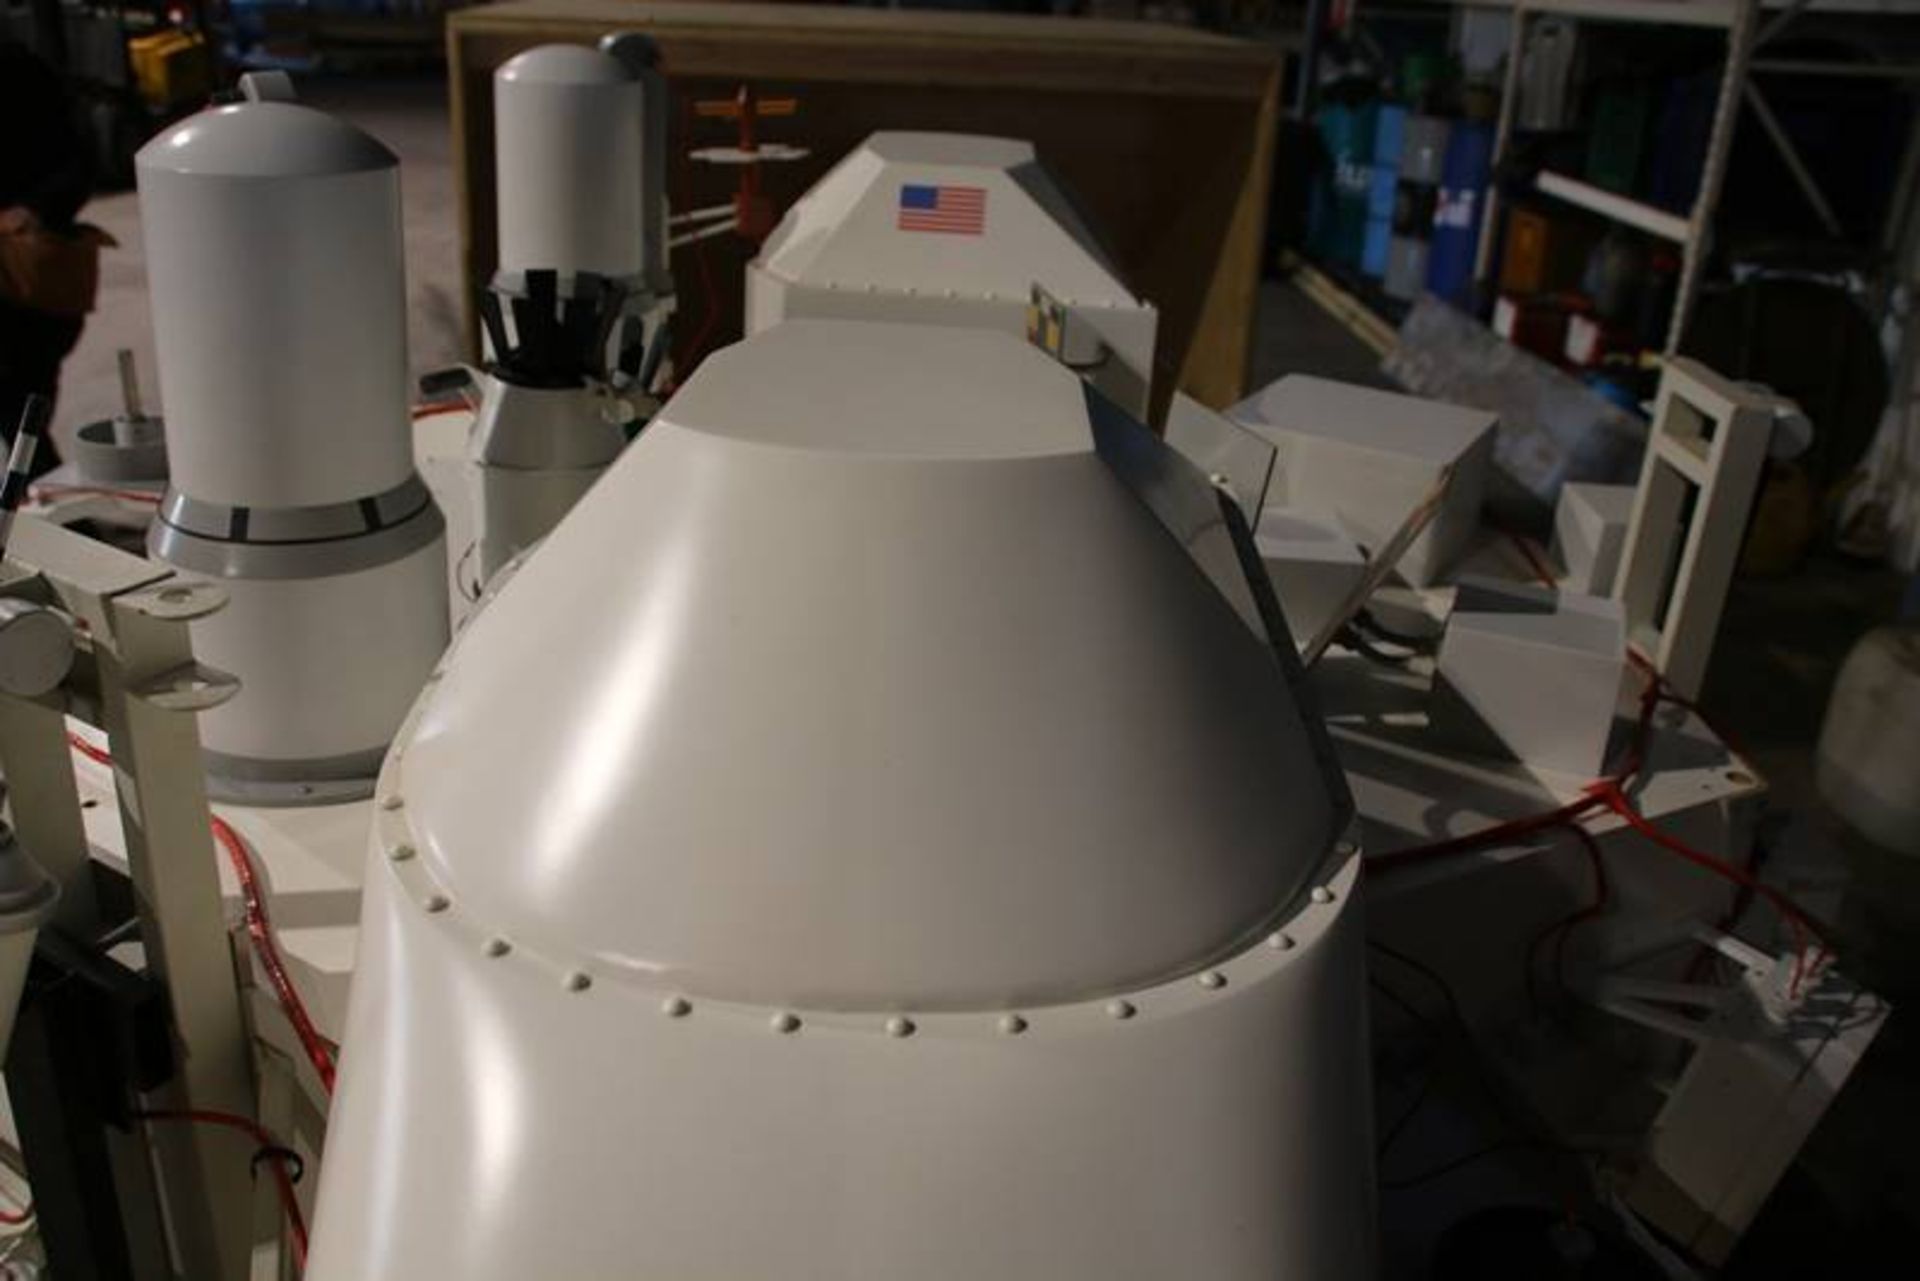 Viking Lander model with astronaut - Image 7 of 37